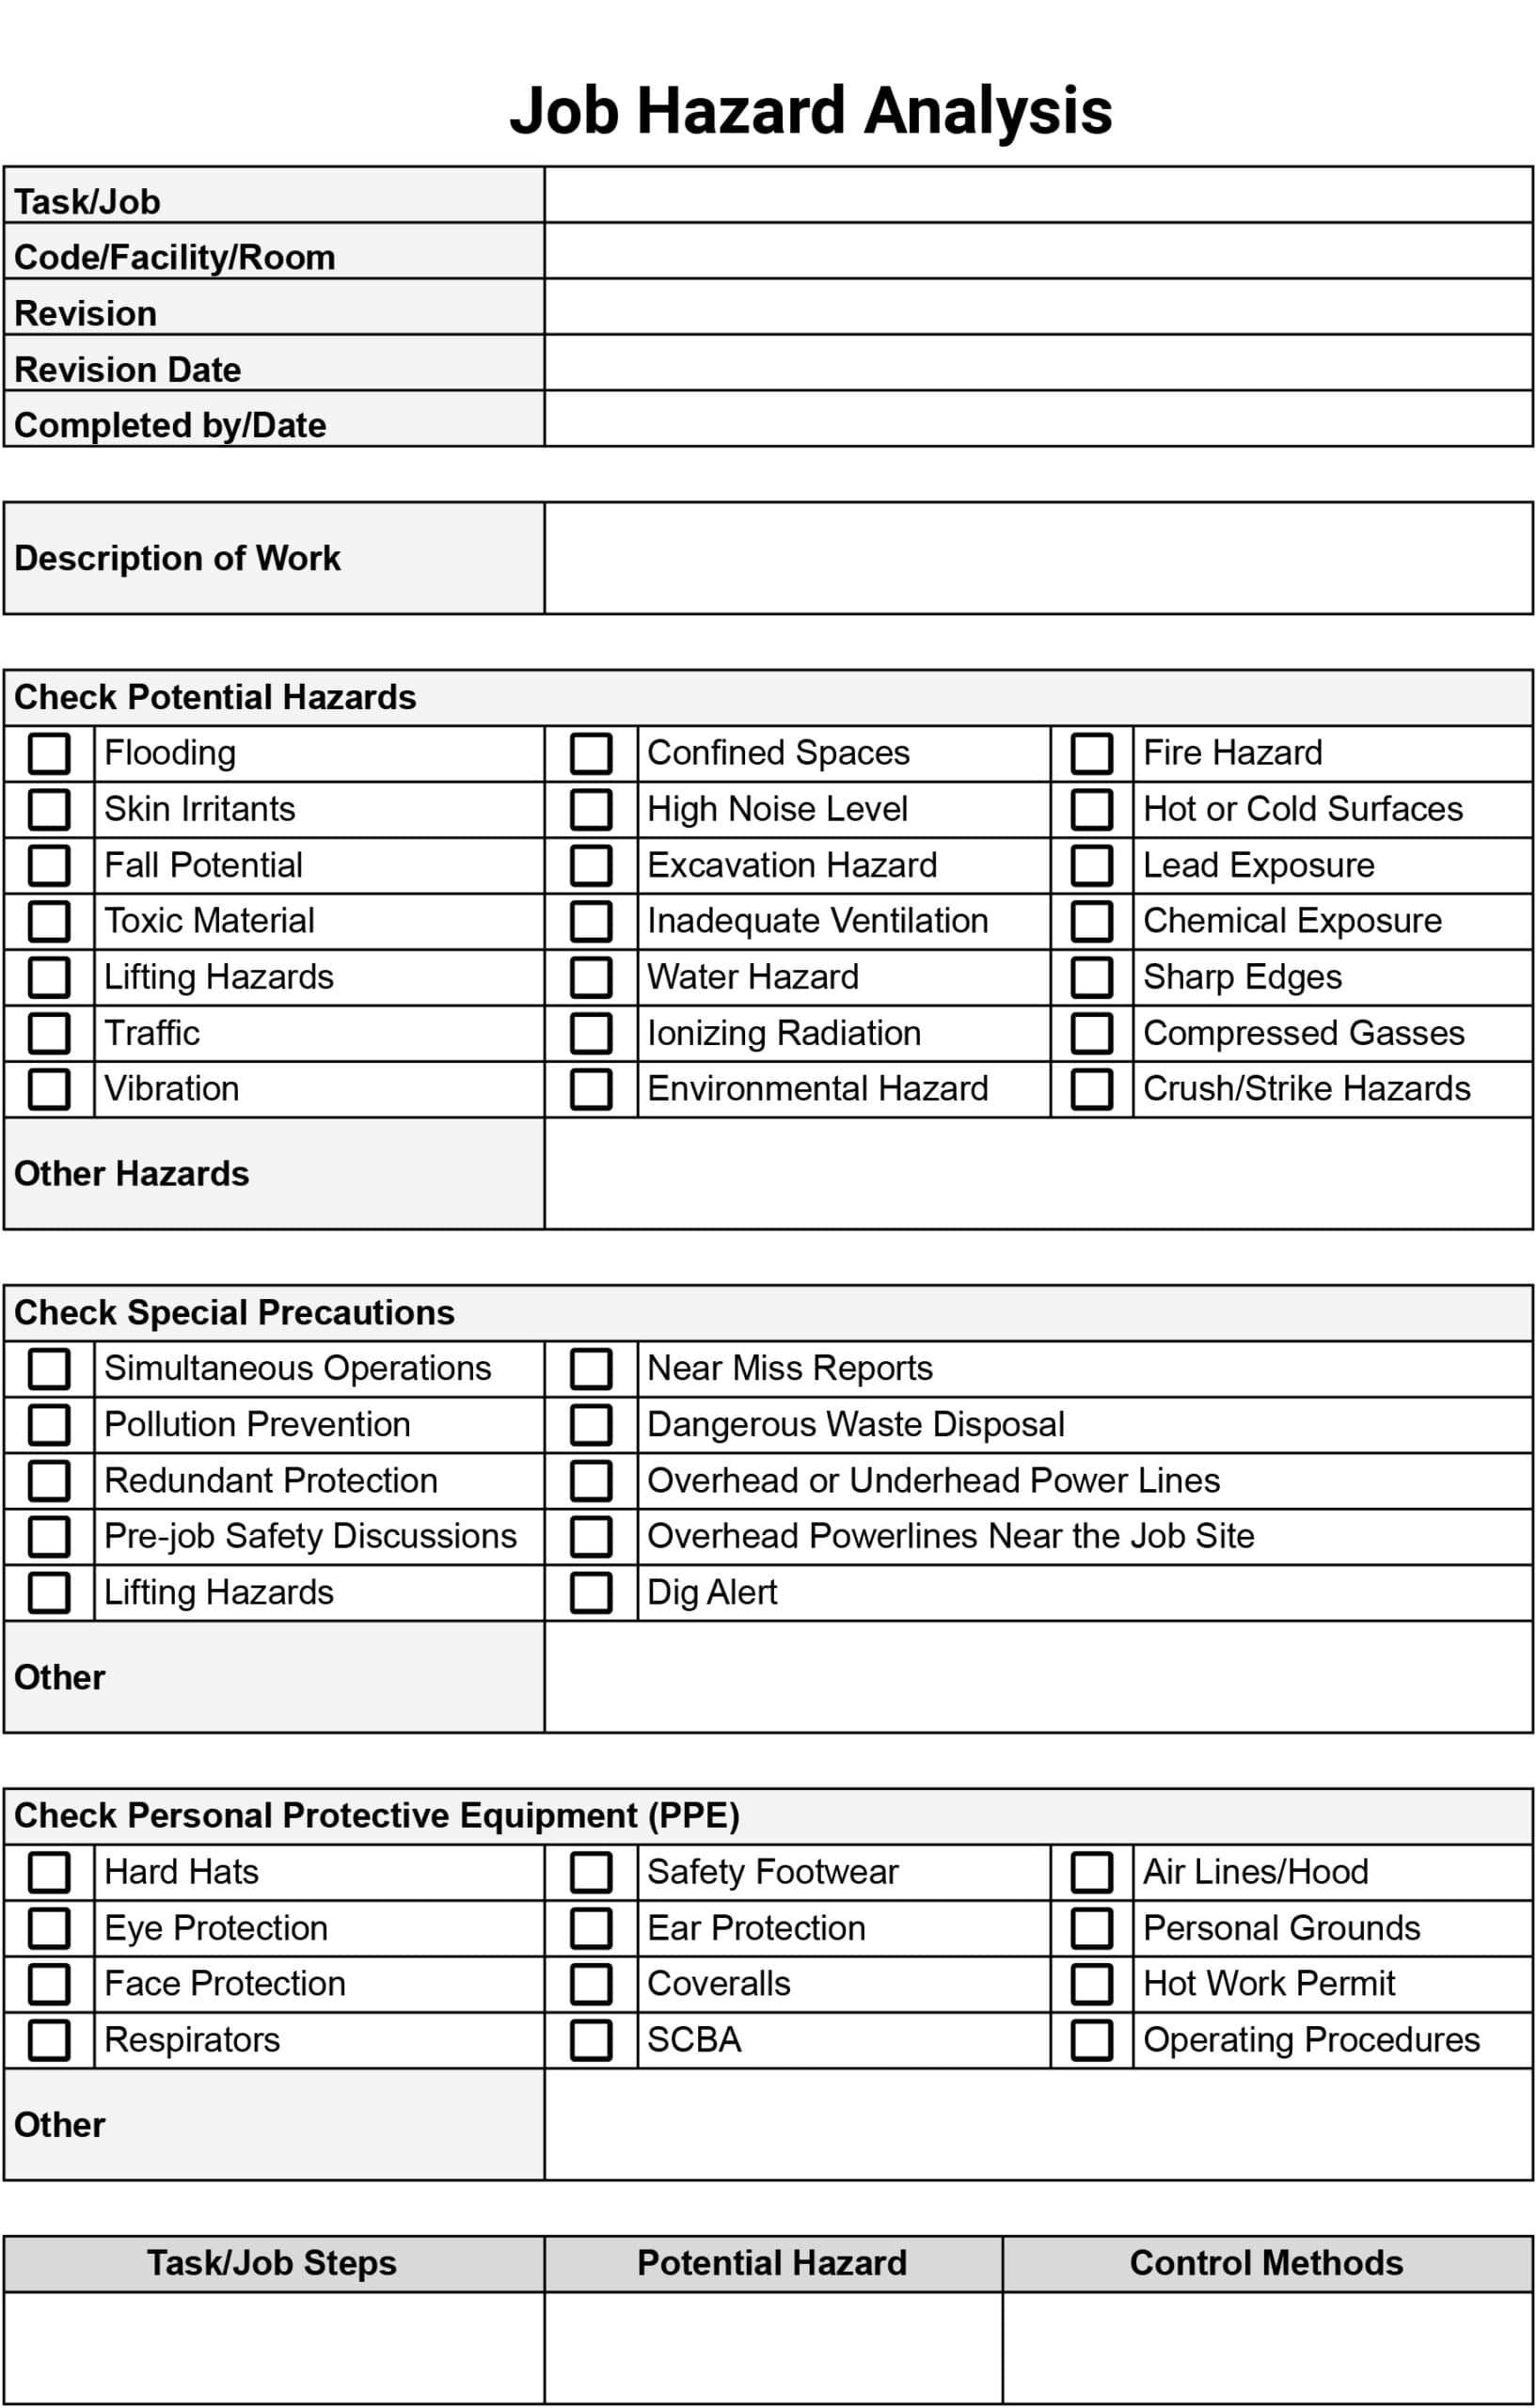 job-hazard-analysis-form-templates-download-print-for-free